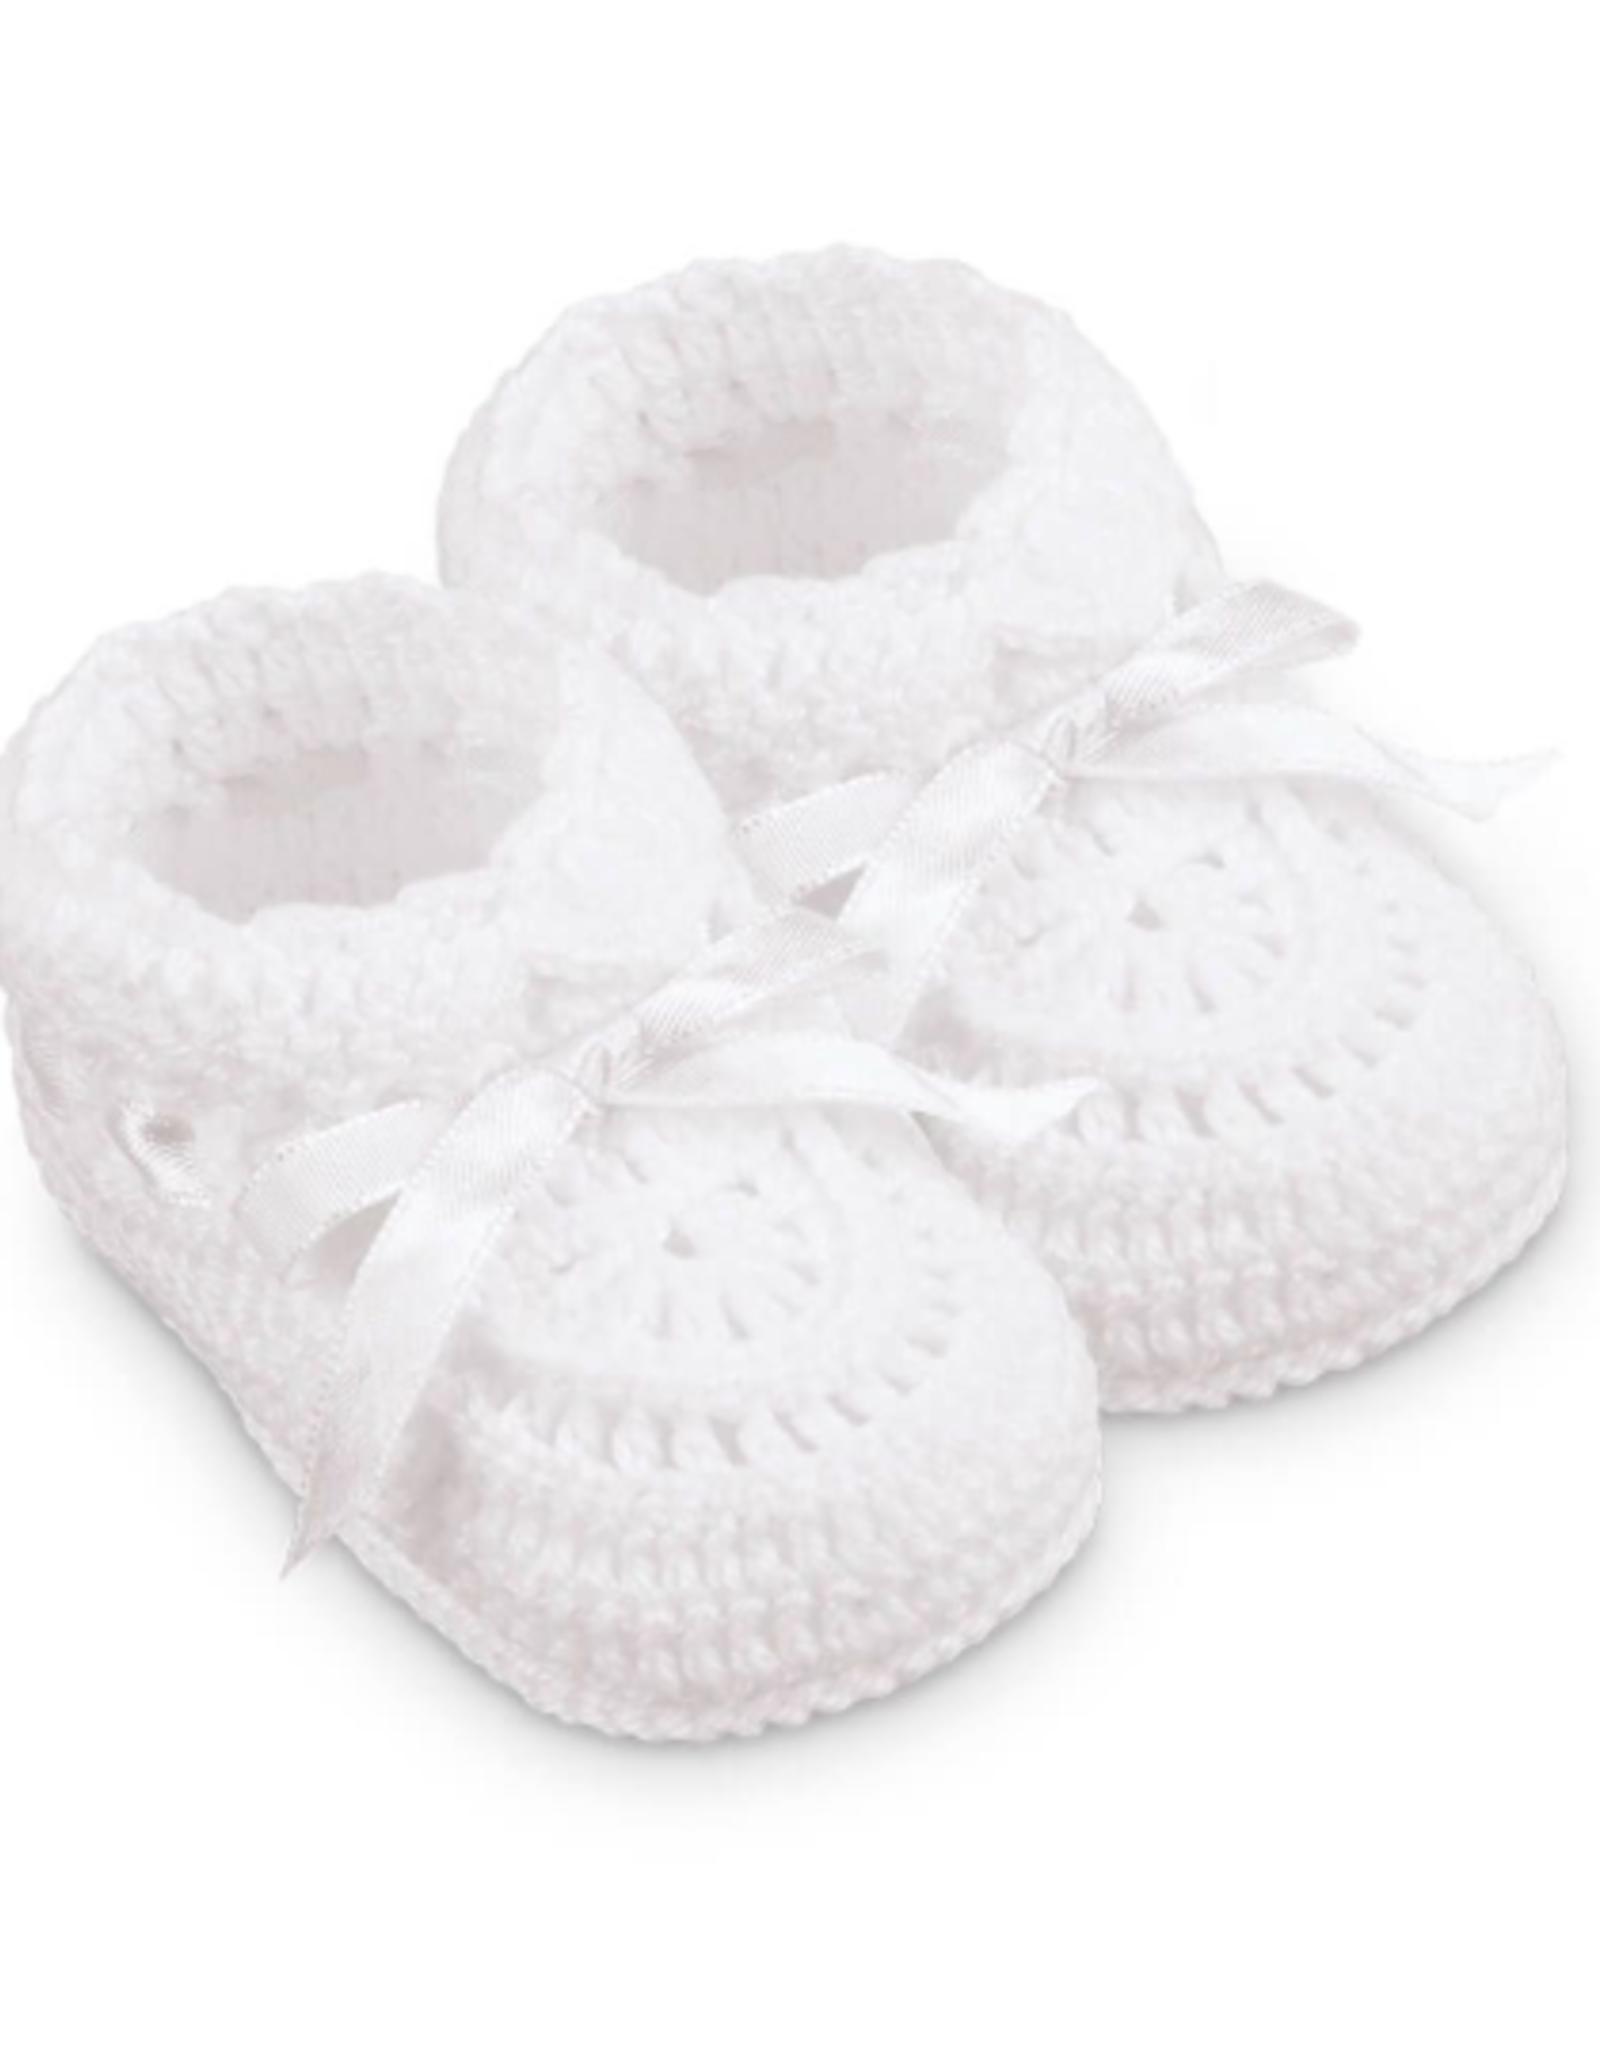 Jefferies Socks White Crochet Bootie 2681 Newborn